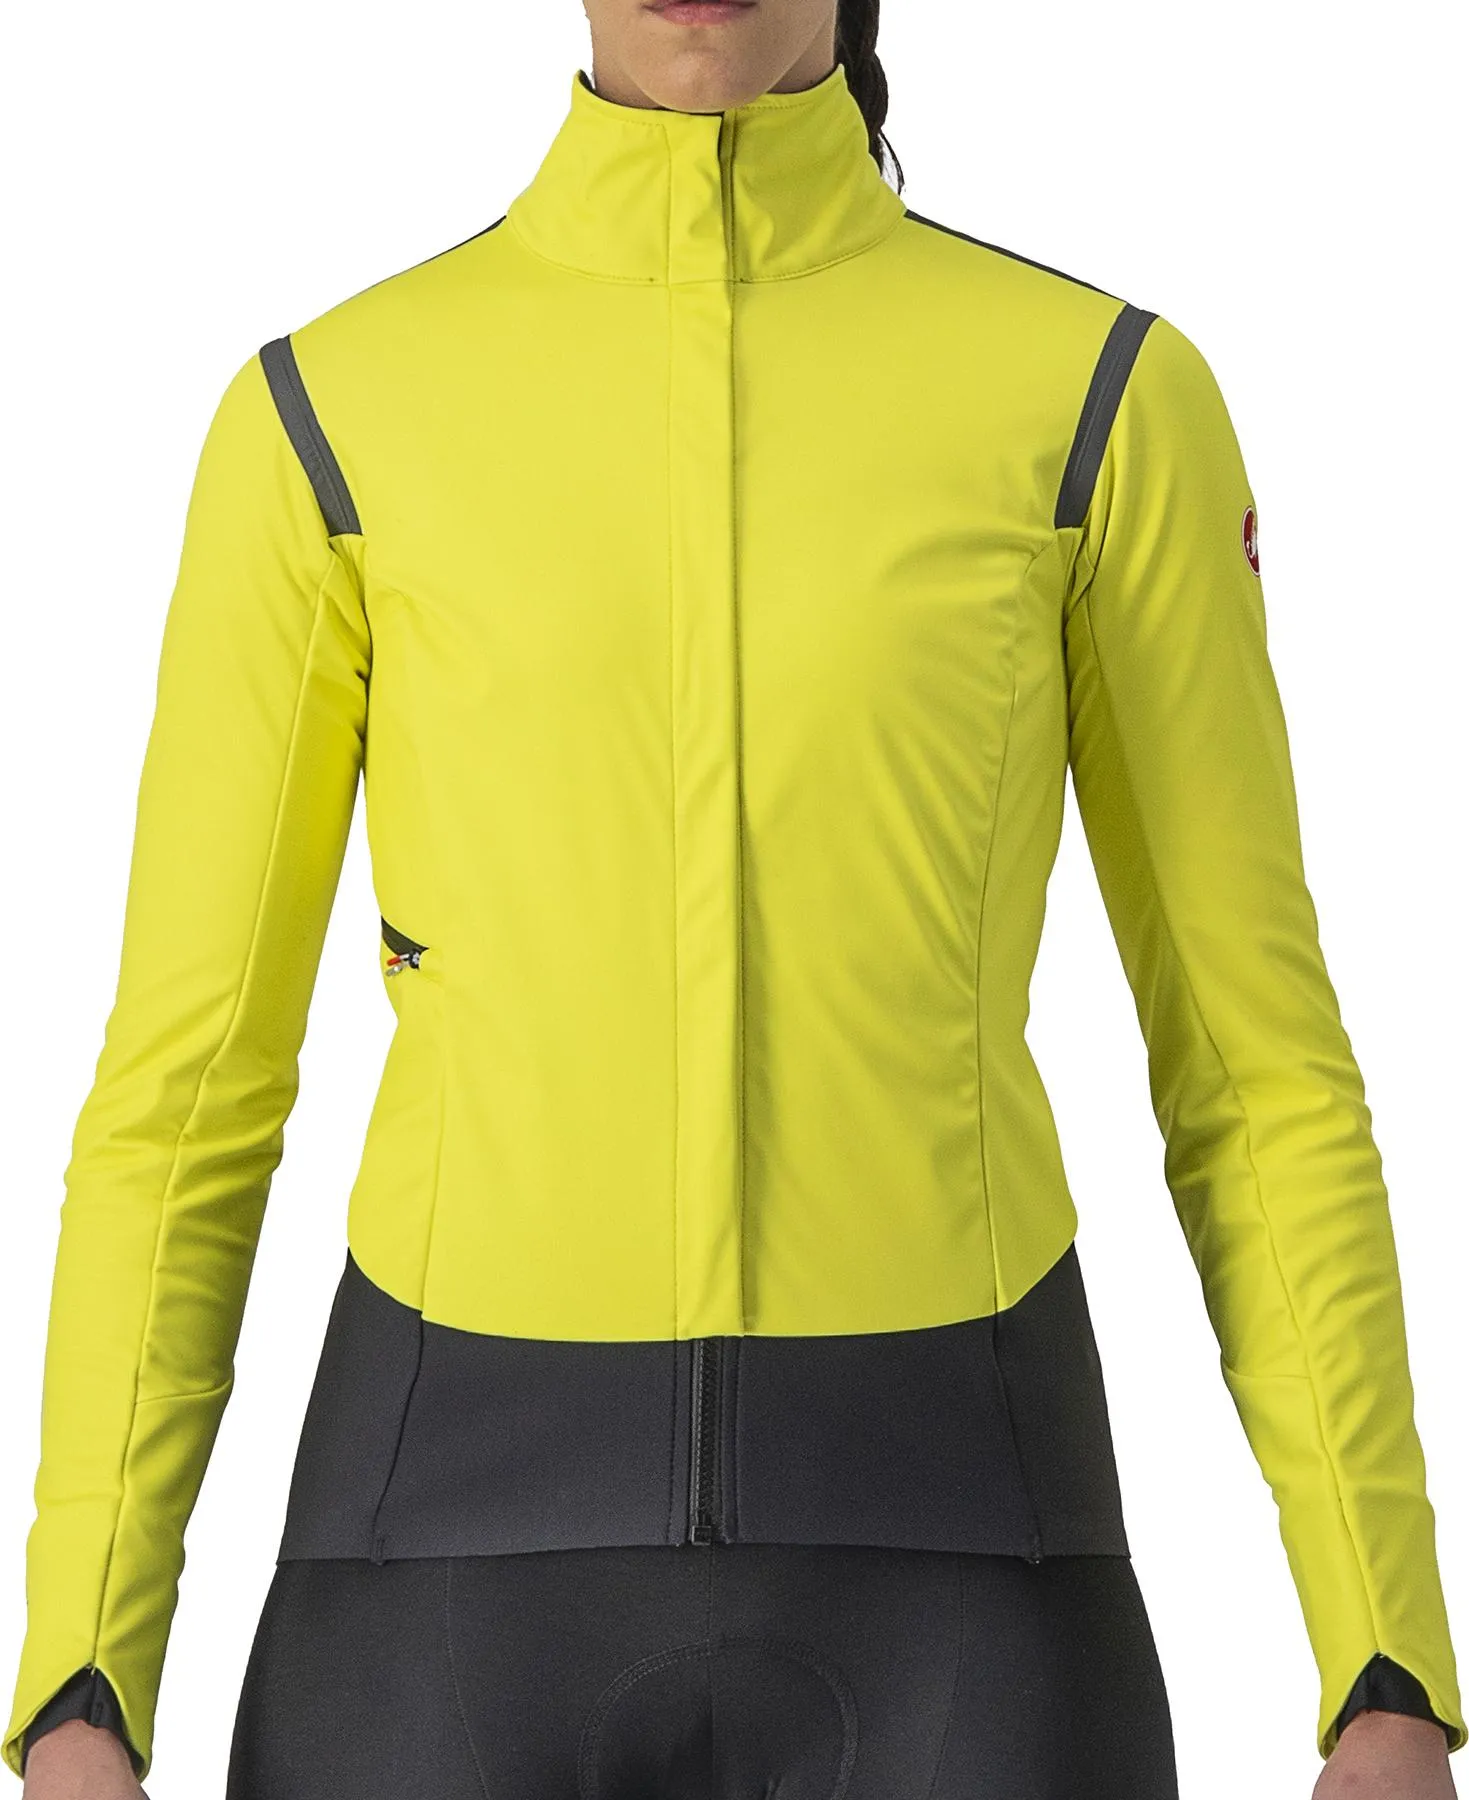  Women's Alpha ROS 2 Jacket, Lime Light Fluorescent/Dark Grey